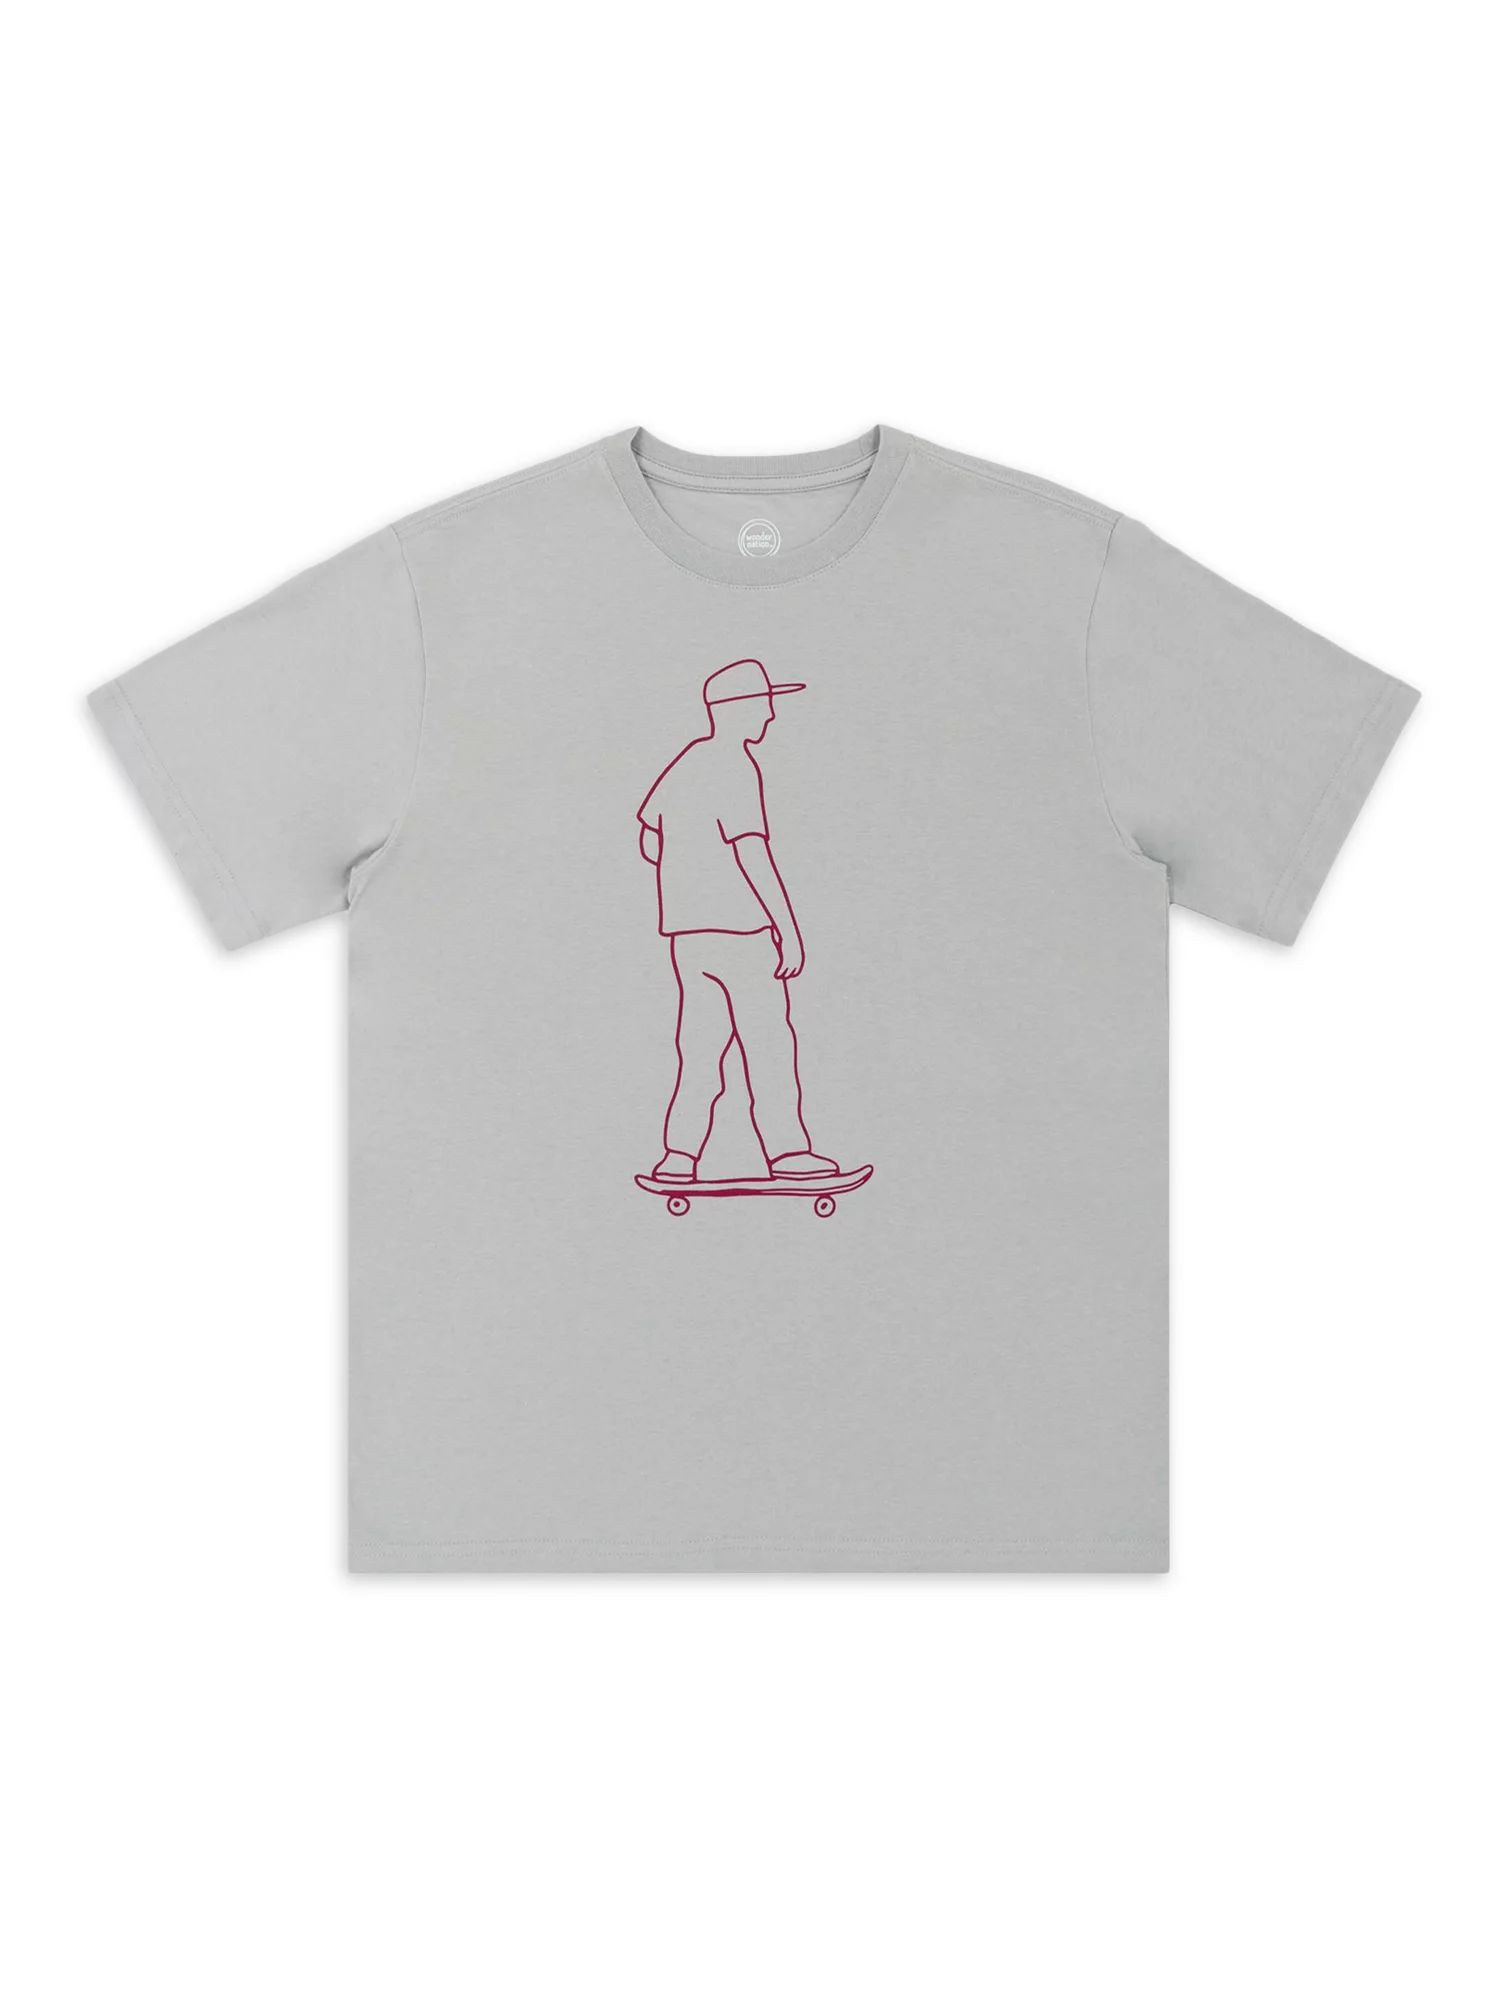 Wonder Nation Boys Short Sleeve Graphic T-Shirt, Sizes 4-18 & Husky | Walmart (US)